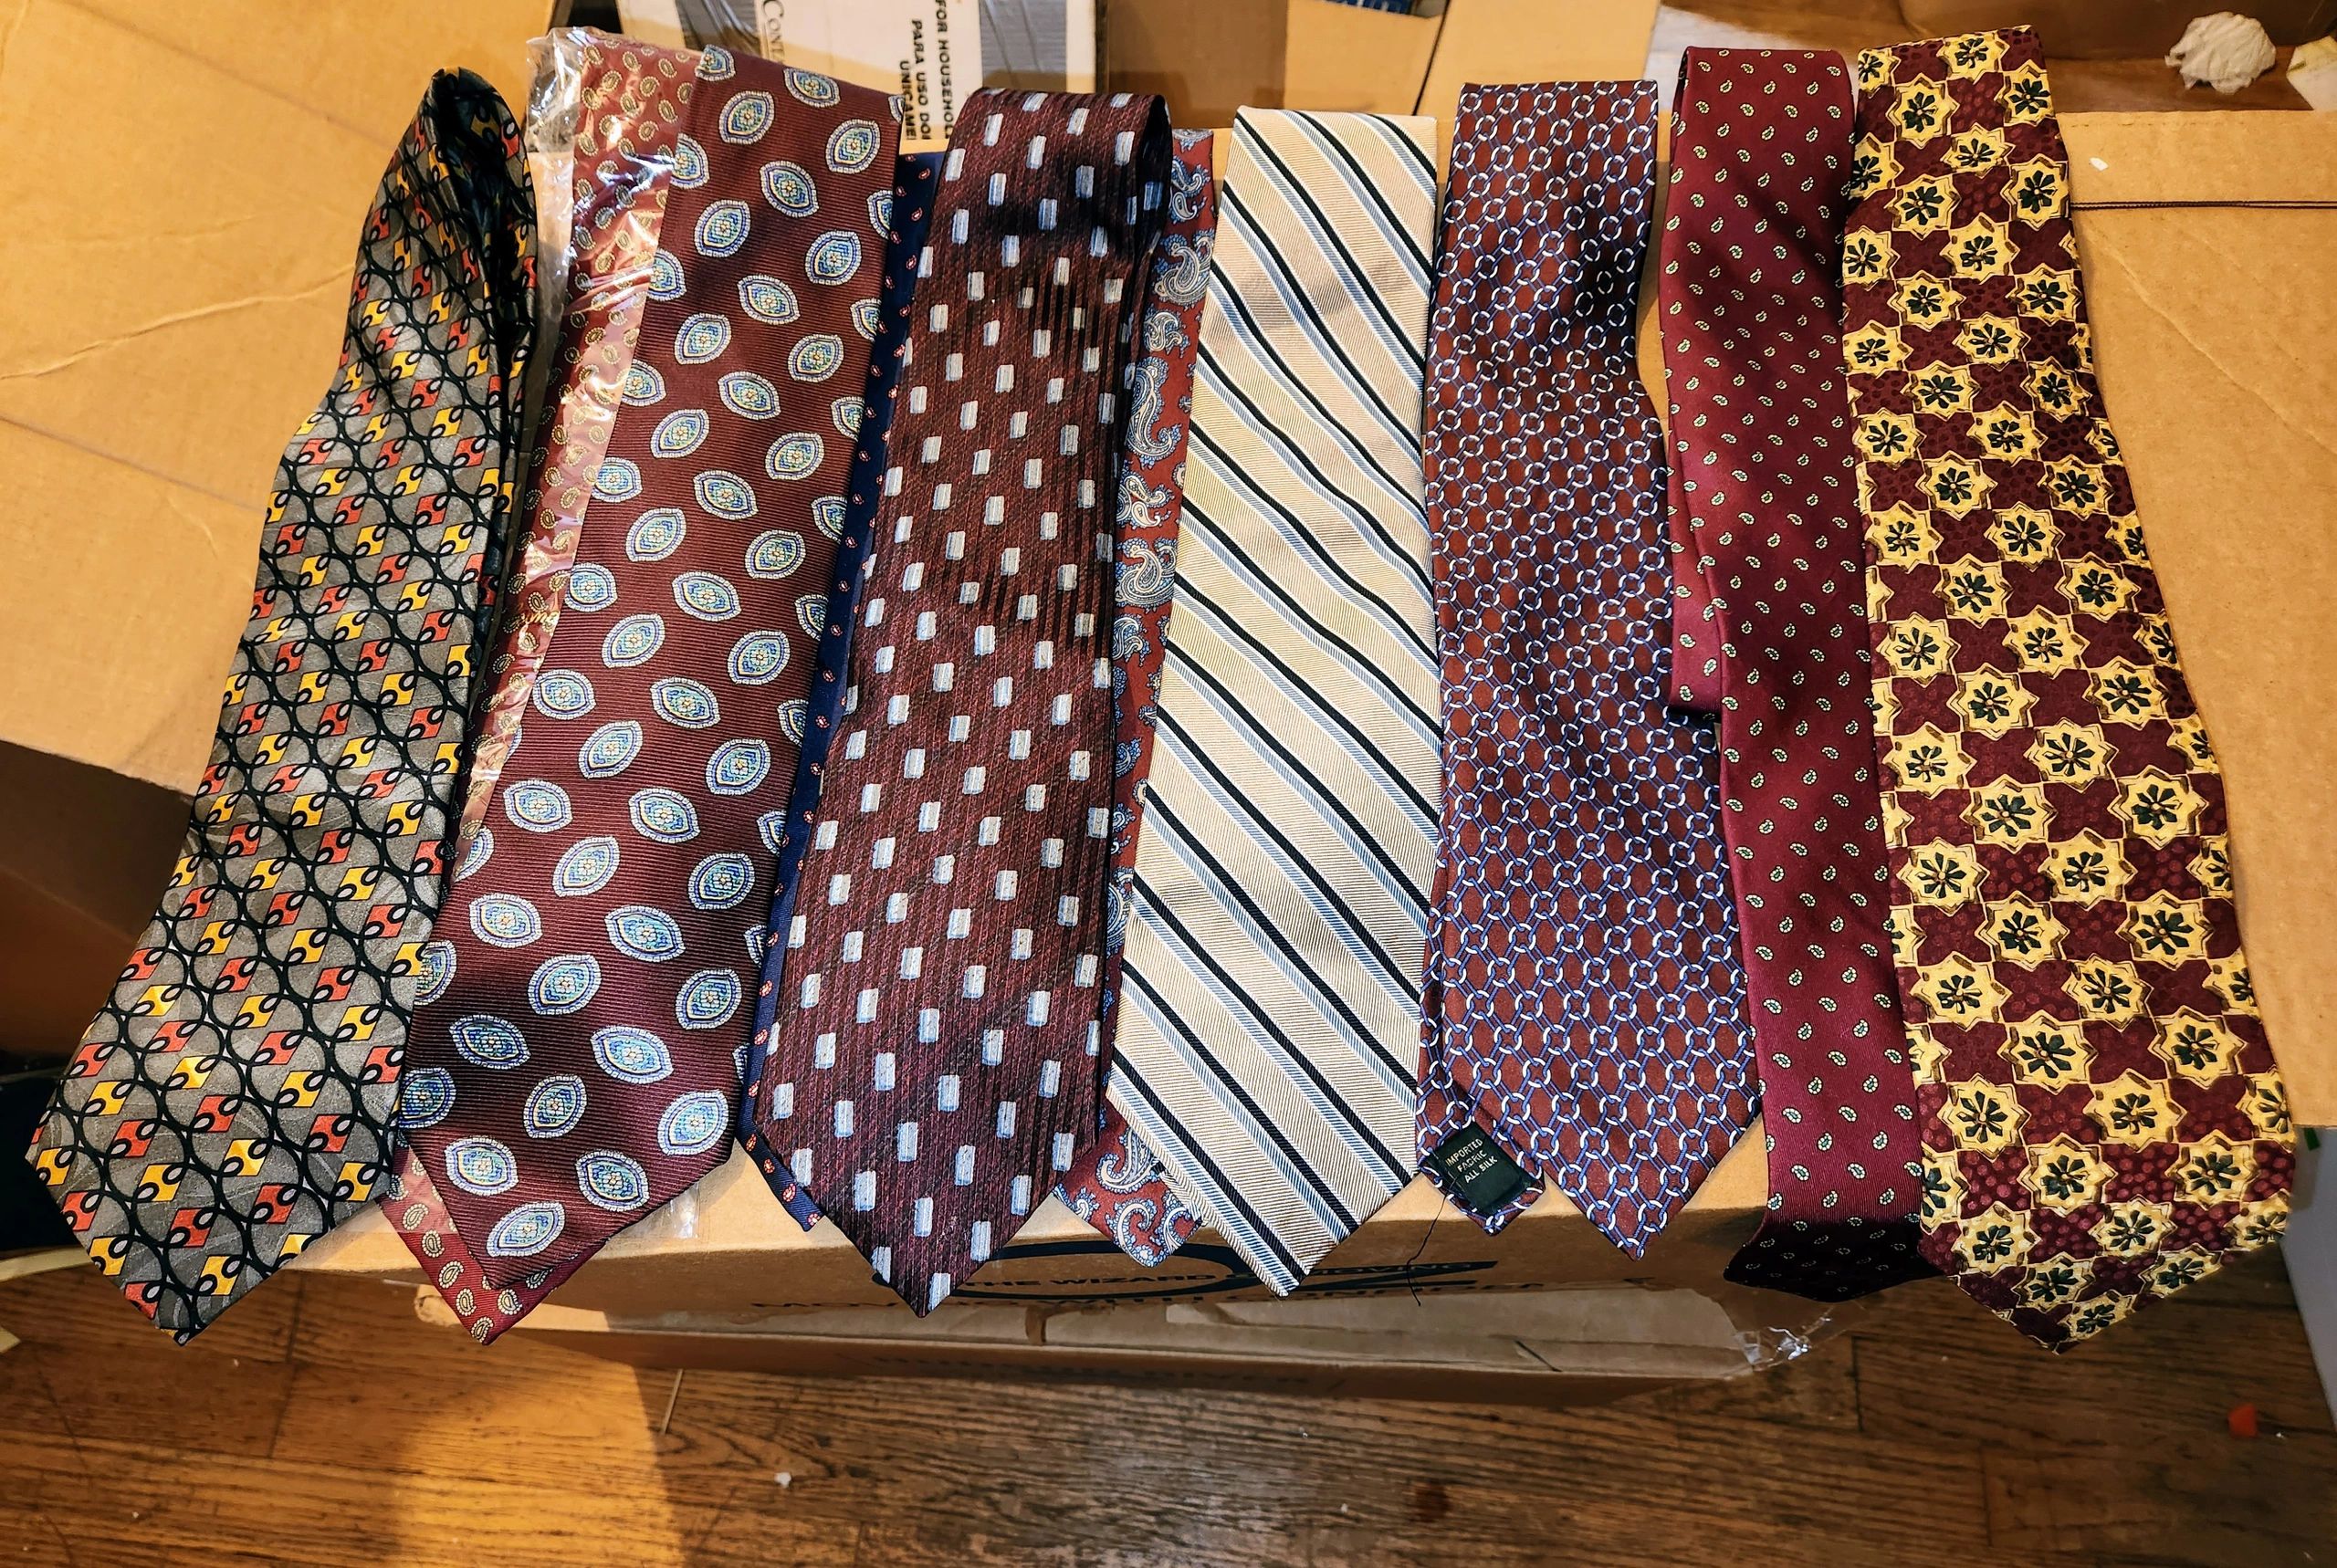 Wholesale Pallet Of Brand New Premium Neckties | CloseoutExplosion.com